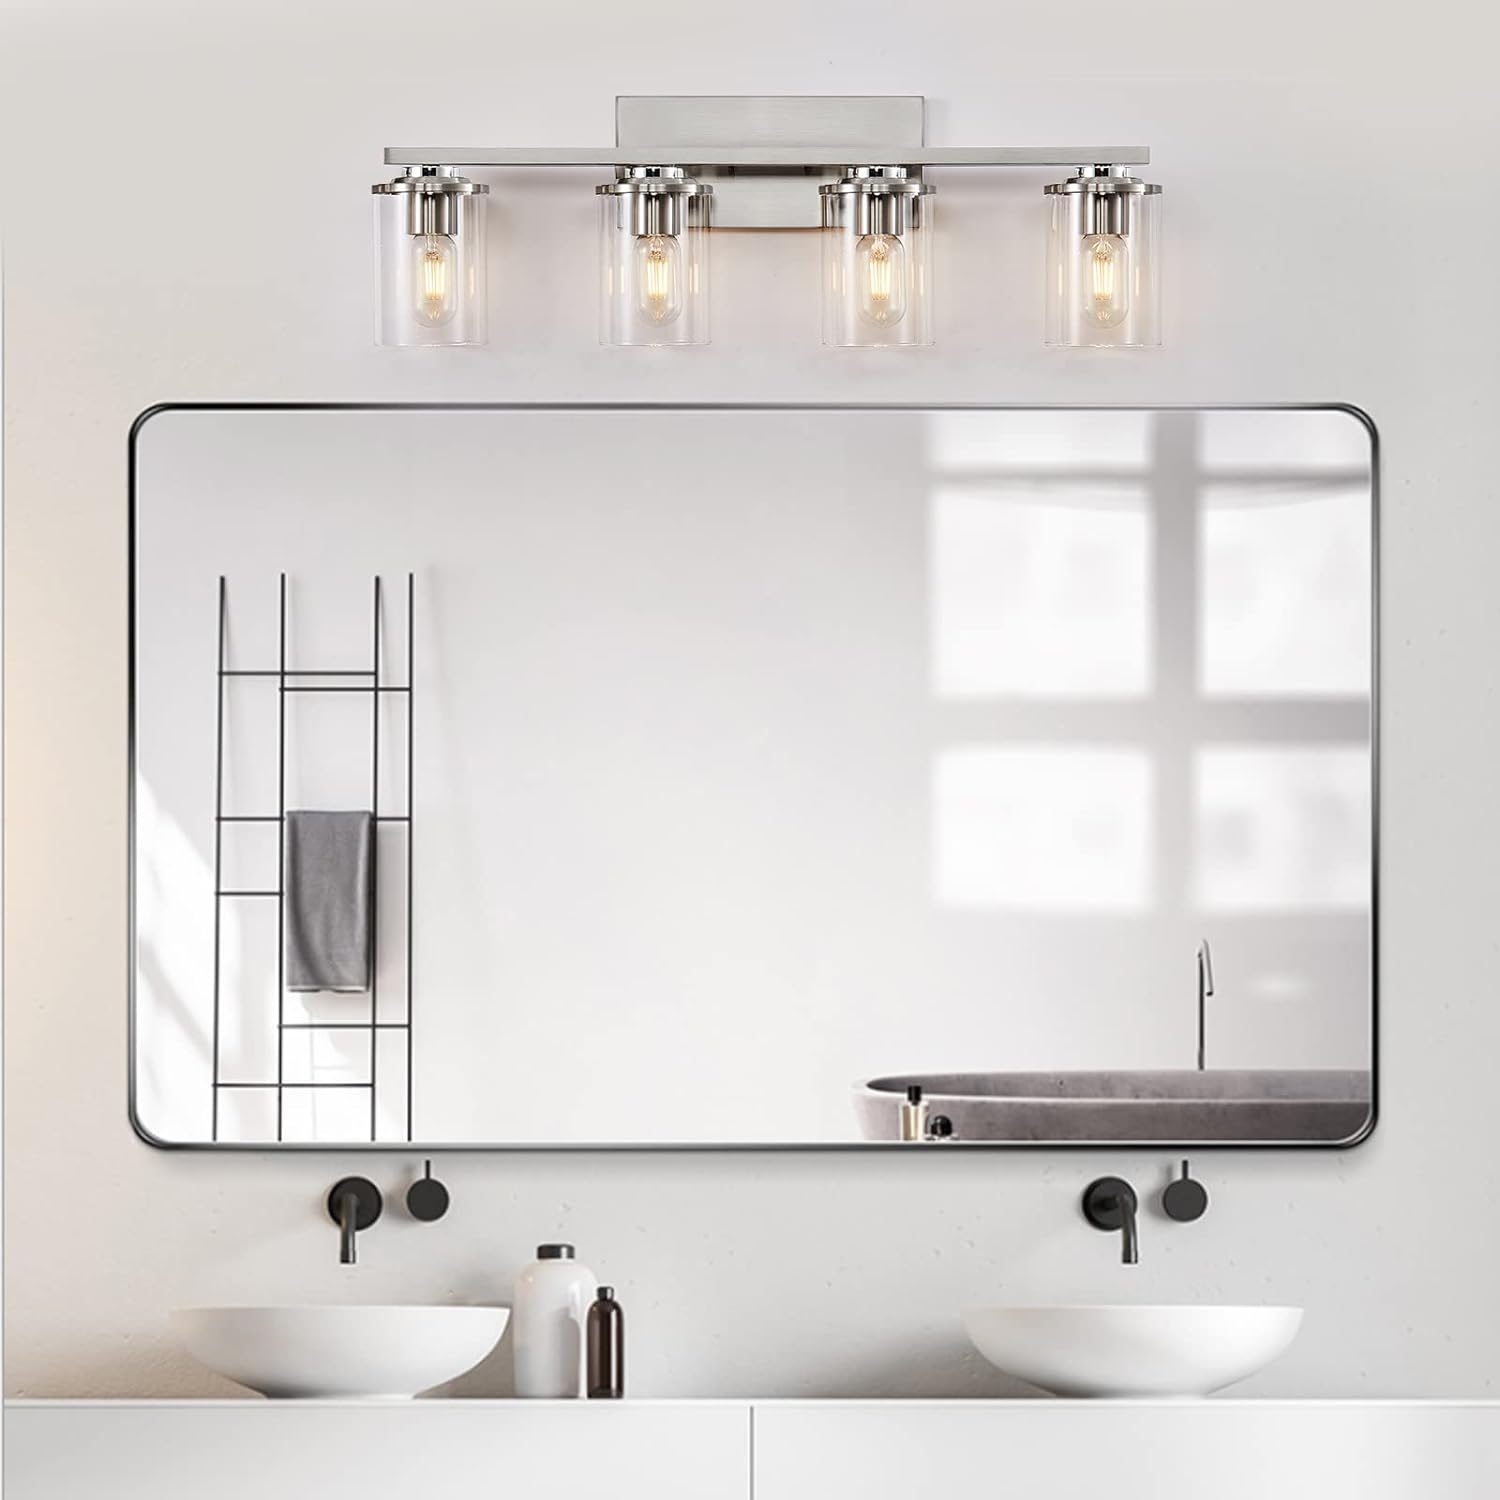 SADENICEL Vanity Lights for Bathroom, 4-Light Brushed Nickel Vanity Light Fixtures, Wall Sconces Bathroom Lighting with Clear Glass Shade